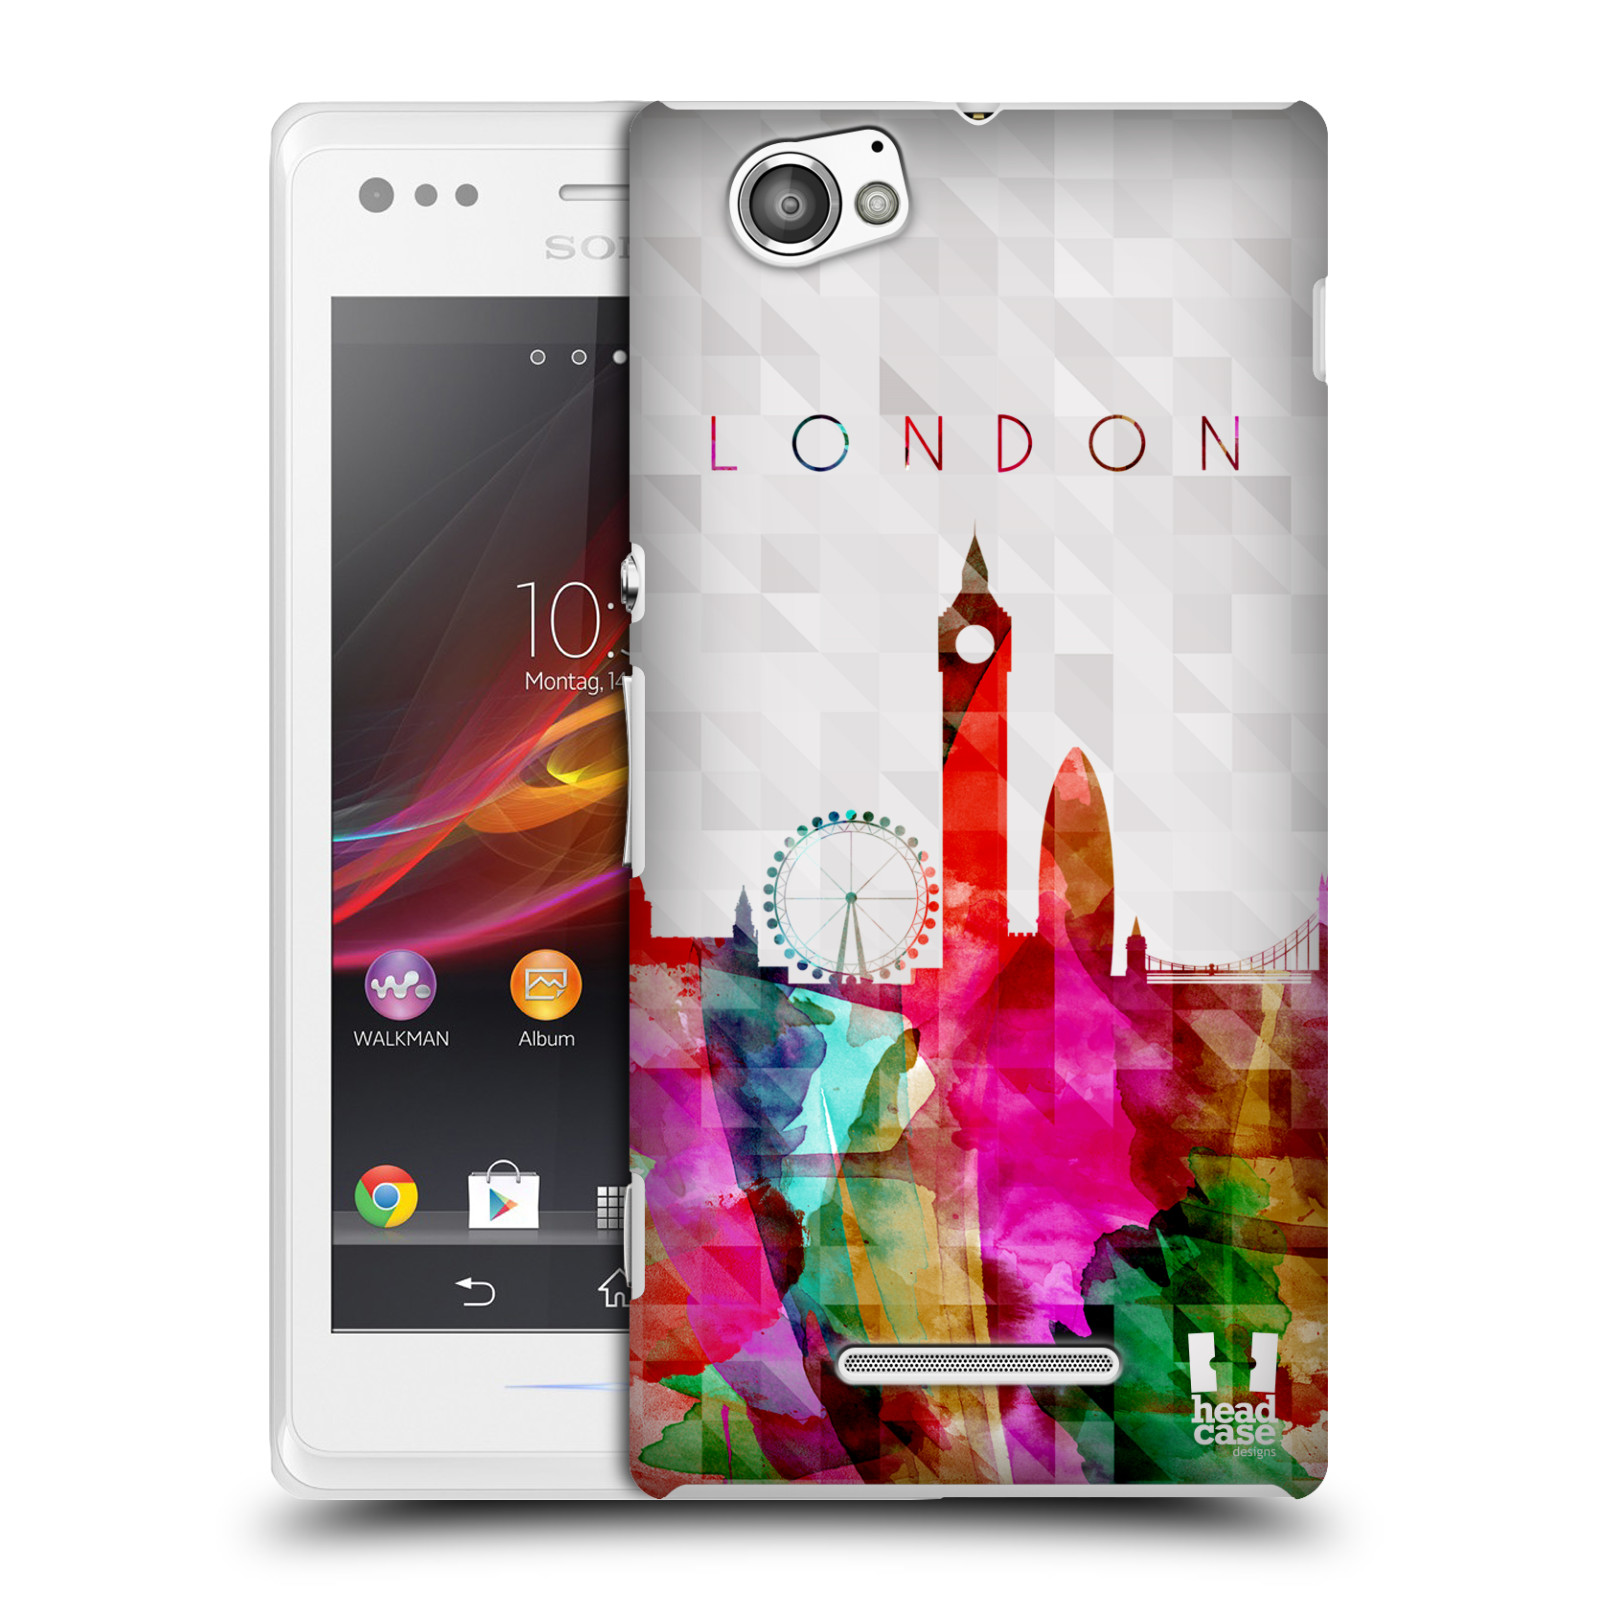 HEAD CASE plastový obal na mobil Sony Xperia M vzor Vodní barva města silueta LONDÝN BIG BEN ANGLIE